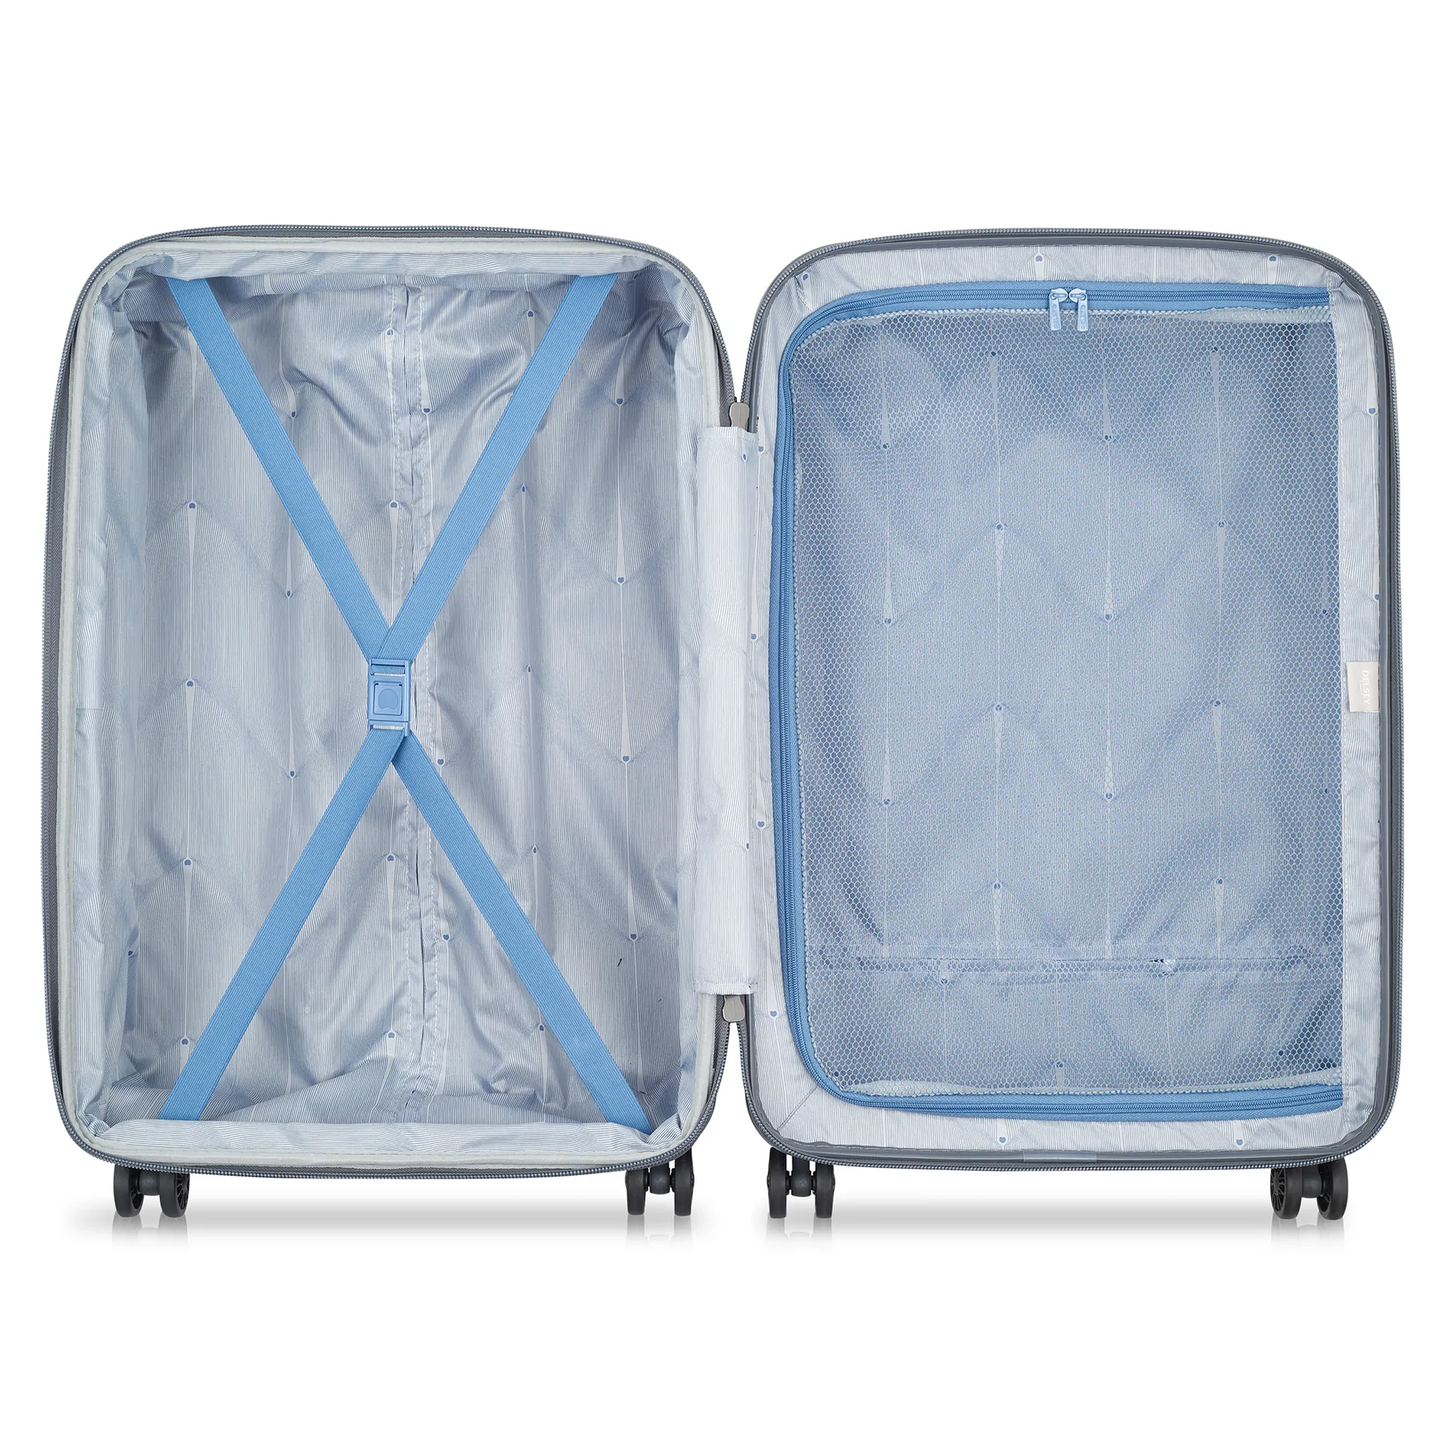 Delsey Comete 3.0 Hardcase Luggage (MEDIUM)